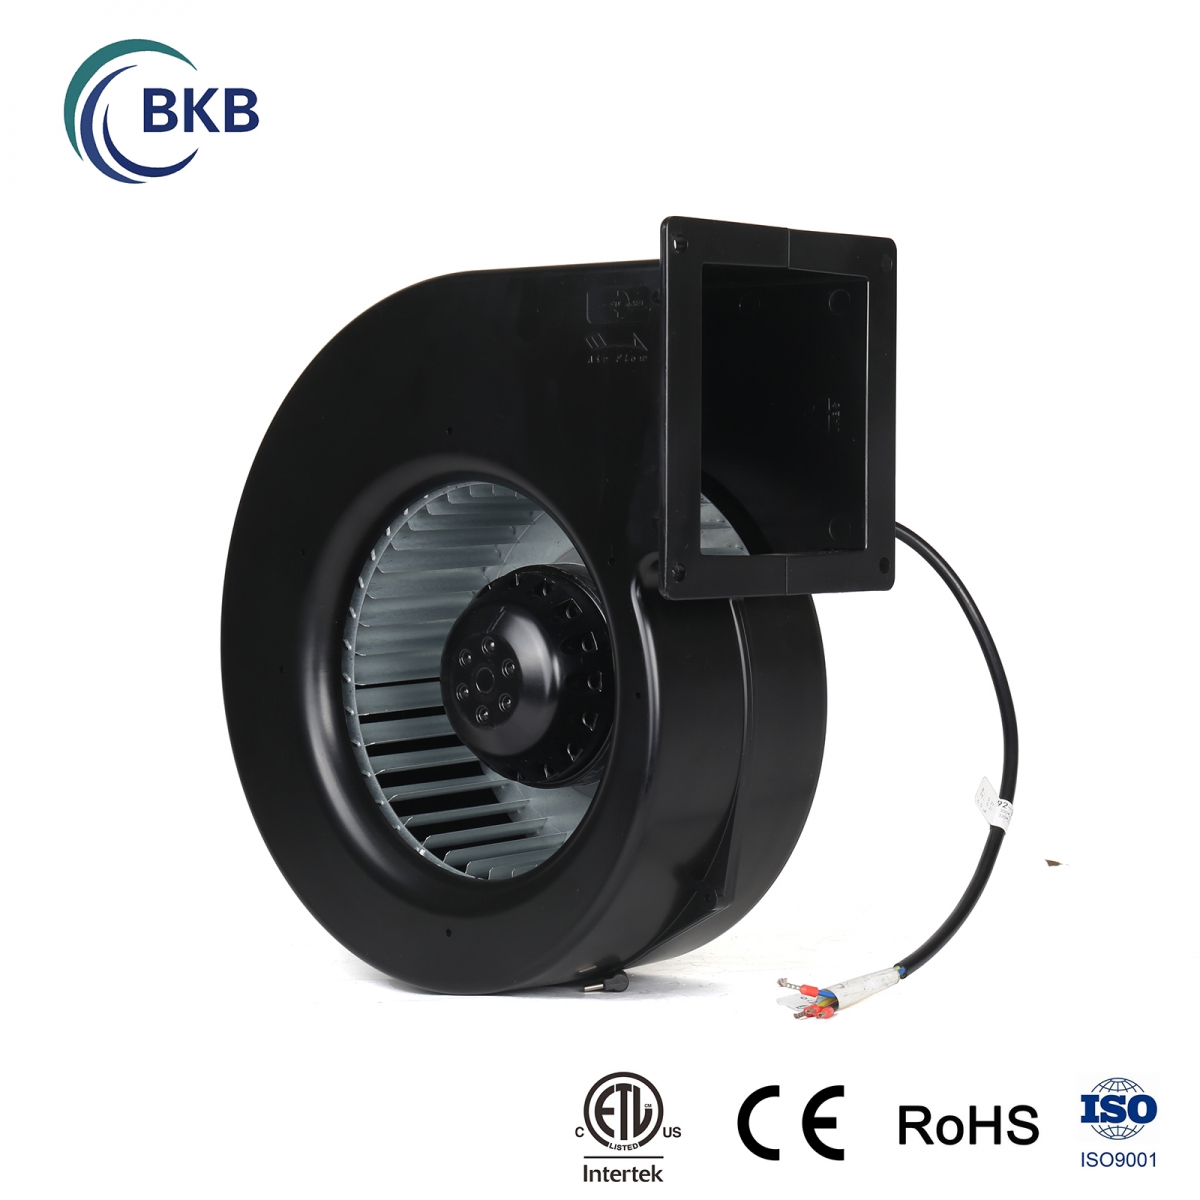 Componentes principales del ventilador centrífugo-Shell-SUNLIGHT BLOWER,Centrifugal Fans, Inline Fans,Motors,Backward curved centrifugal fans ,Forward curved centrifugal fans ,inlet fans, EC fans